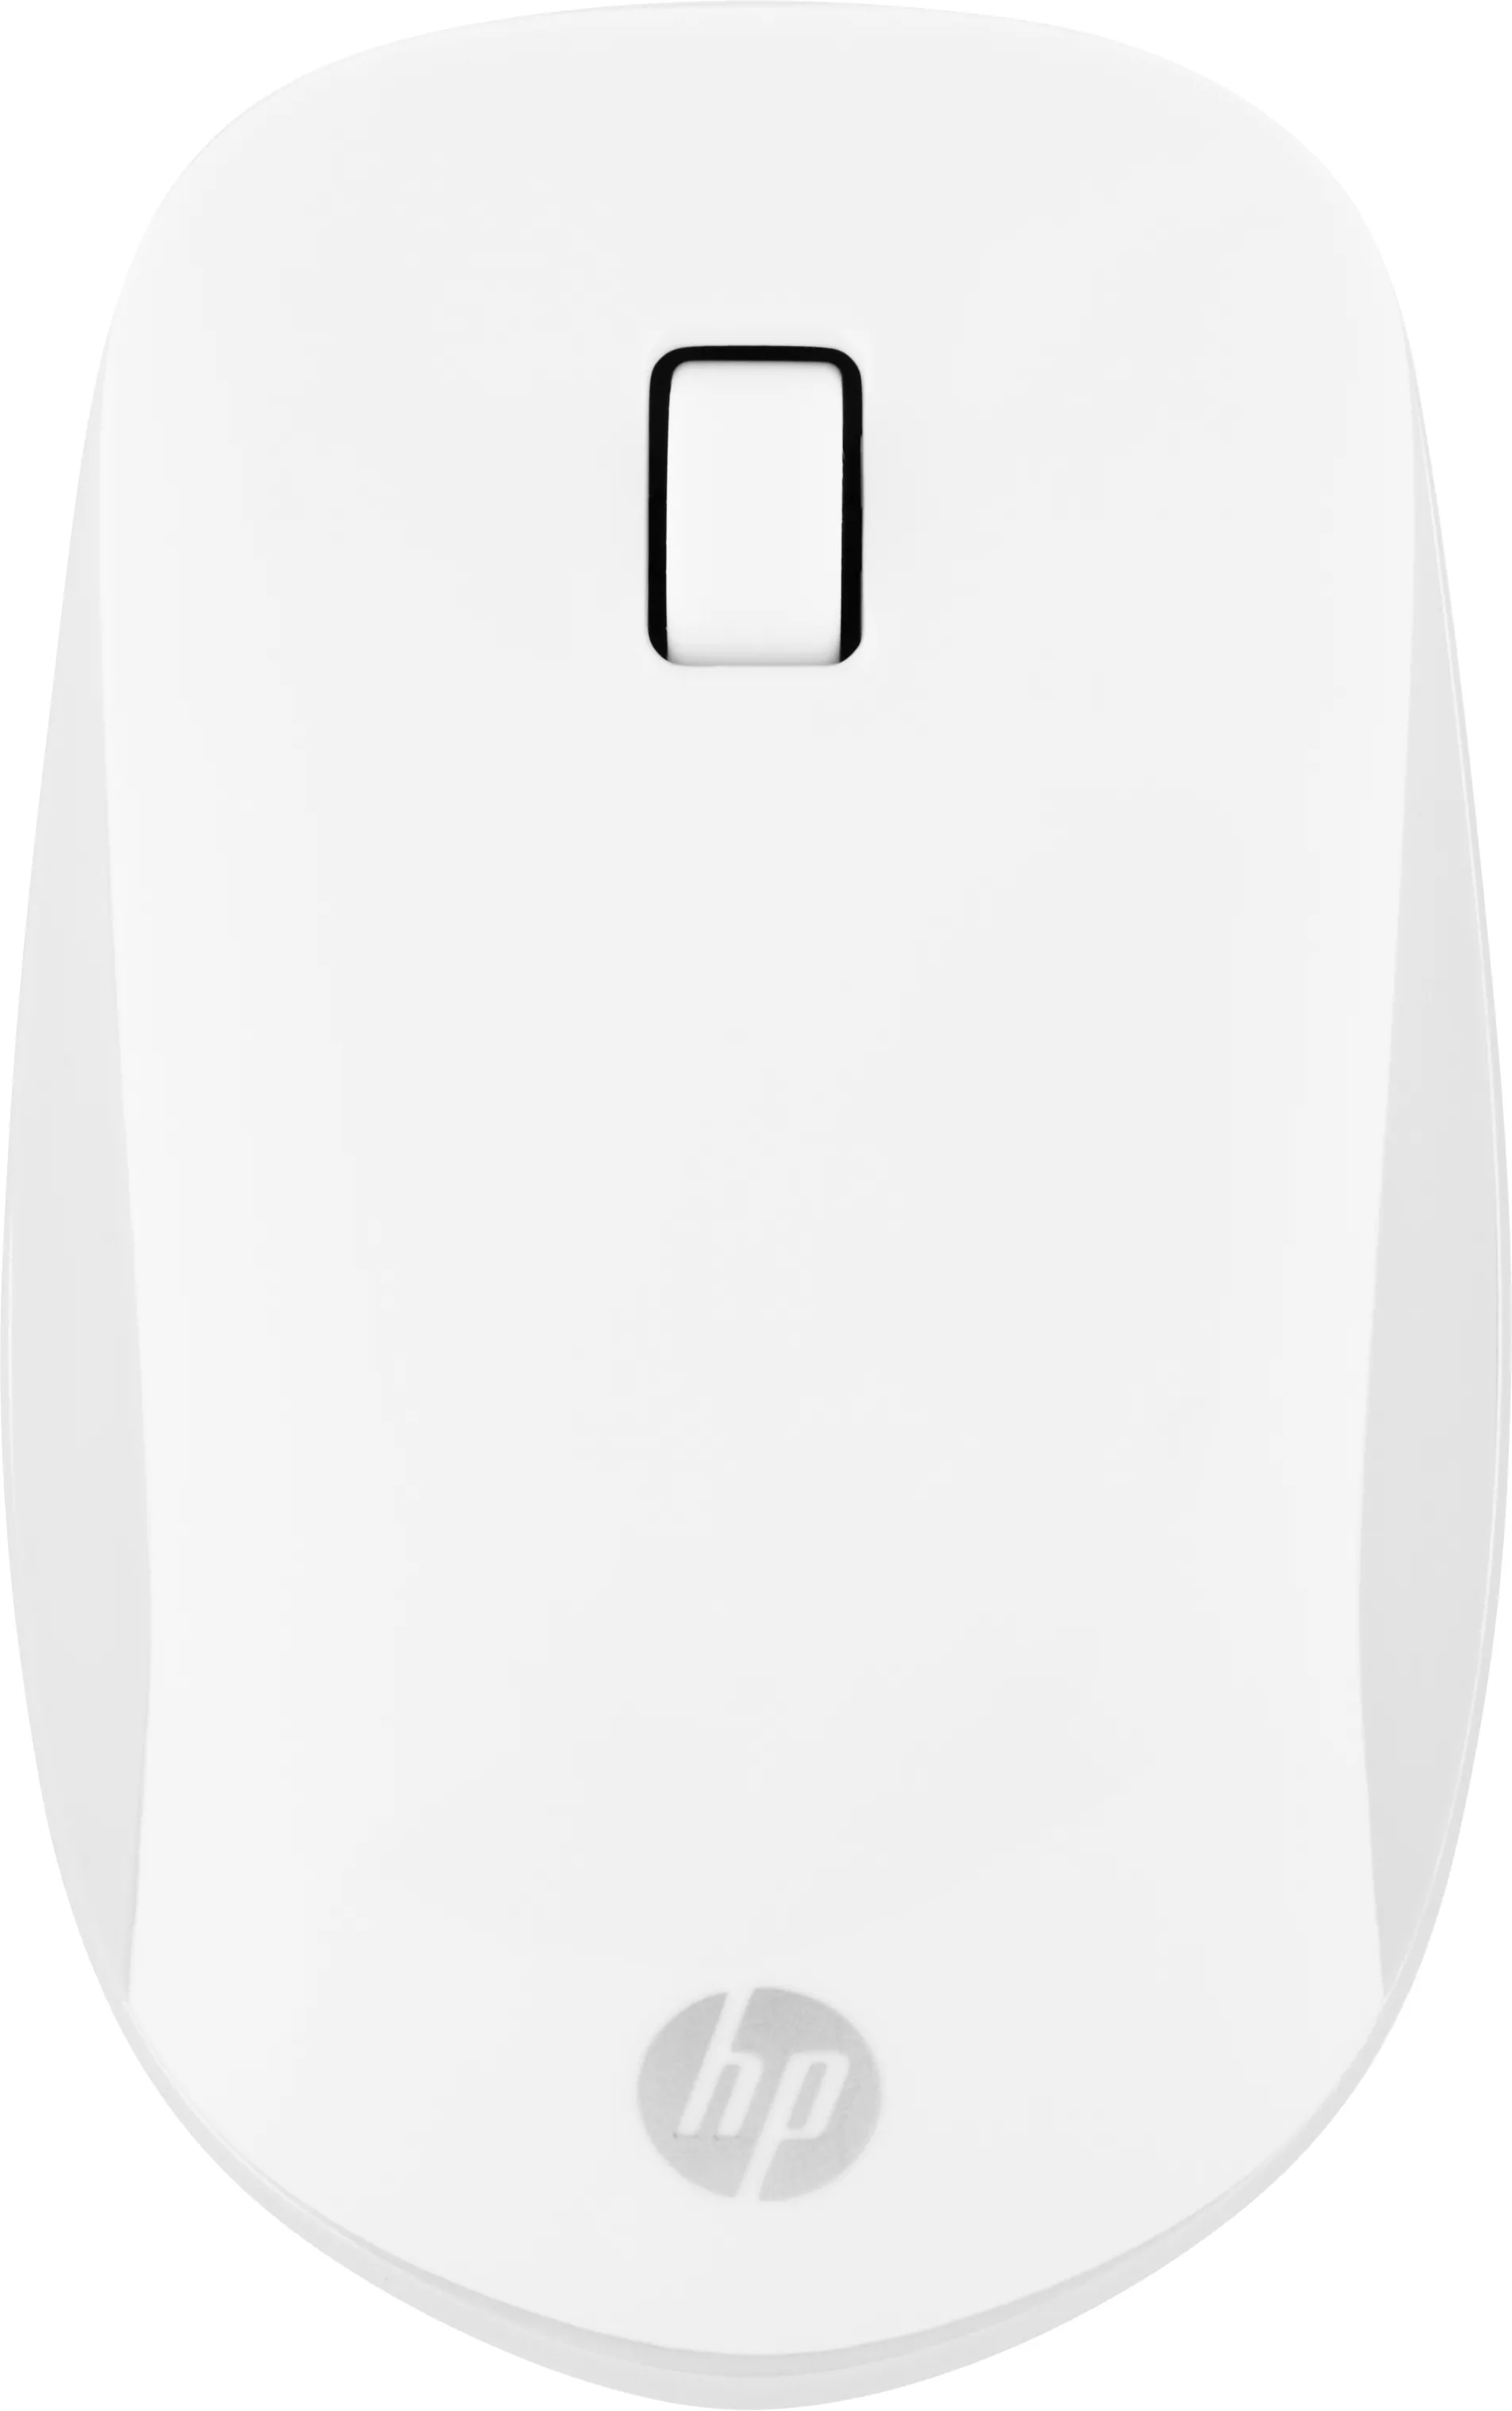 Achat HP 410 Souris Bluetooth ultra-plate blanche au meilleur prix